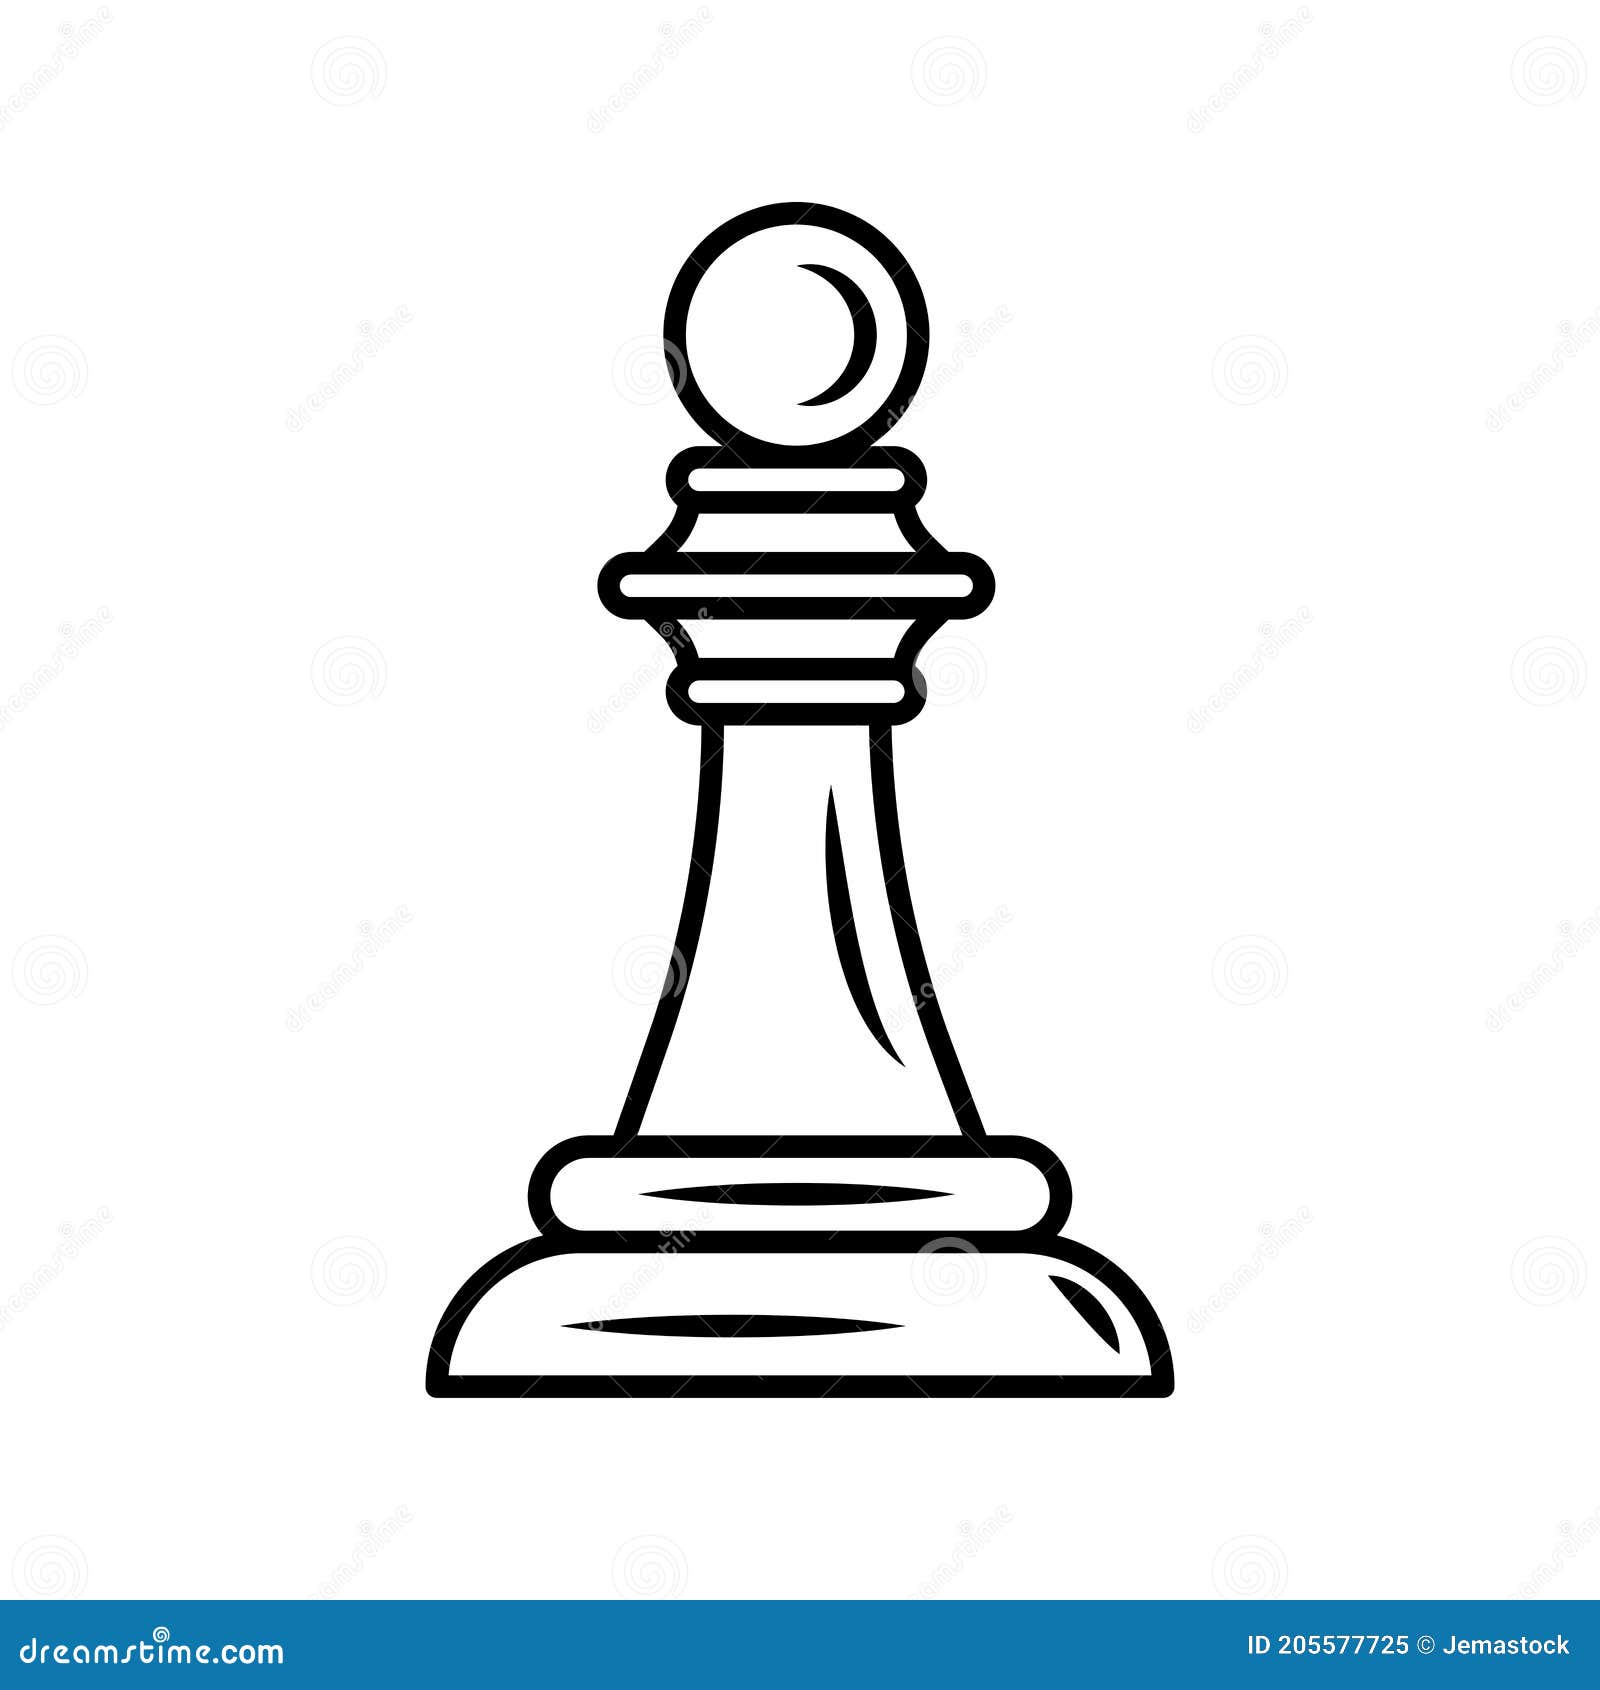 Jogo de xadrez de desenho animado modelo 3d